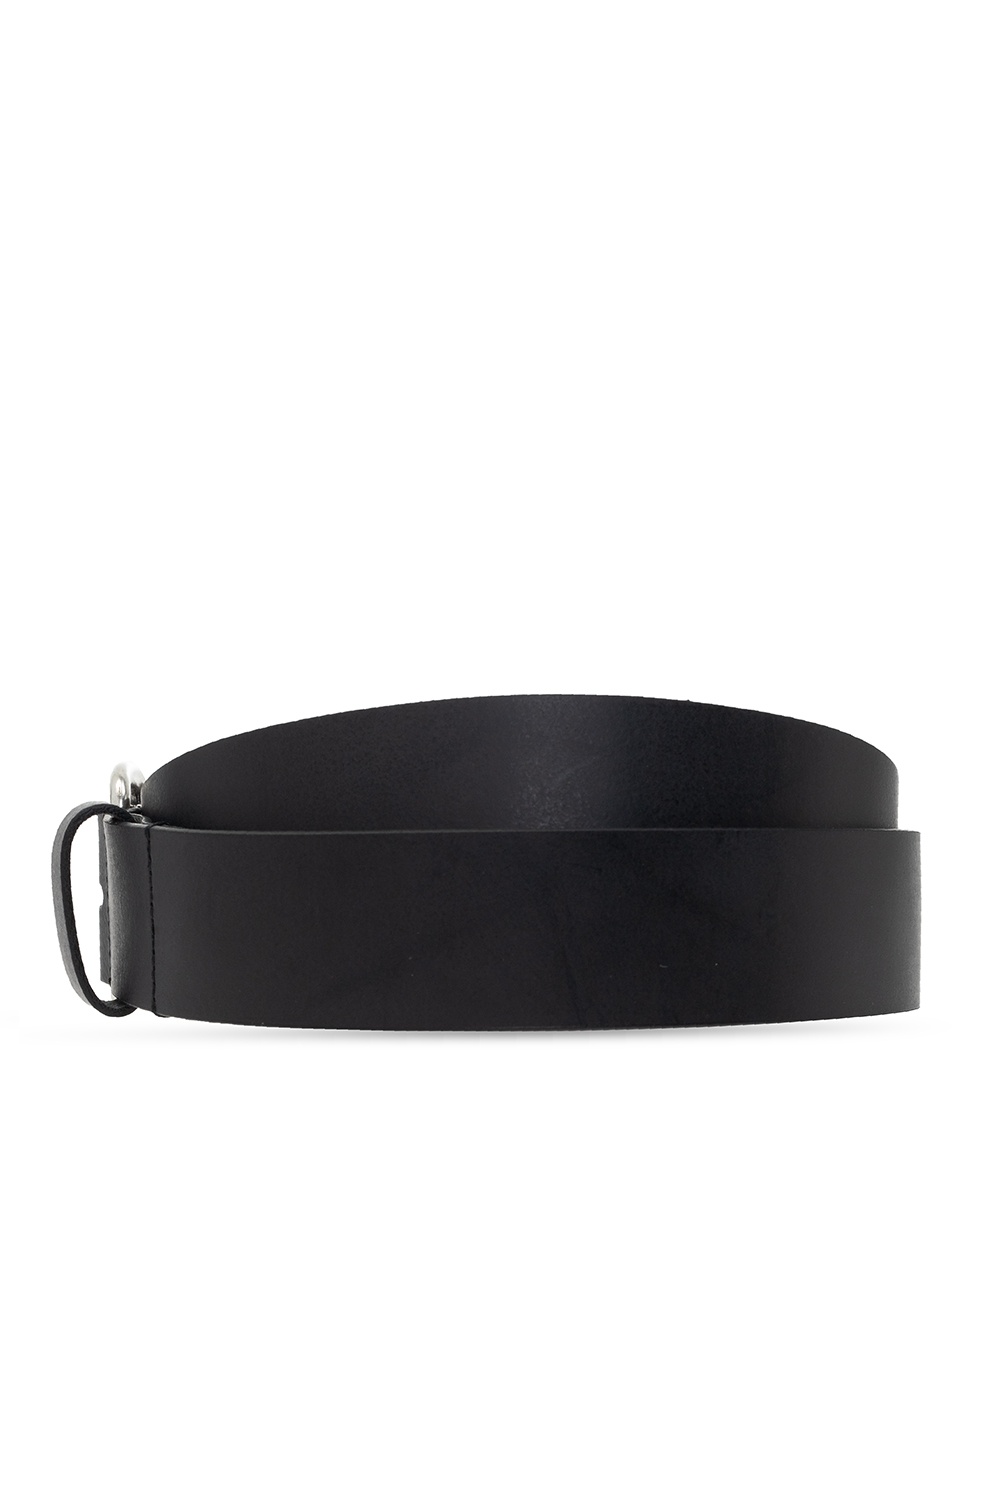 Diesel ‘B-Division’ leather belt